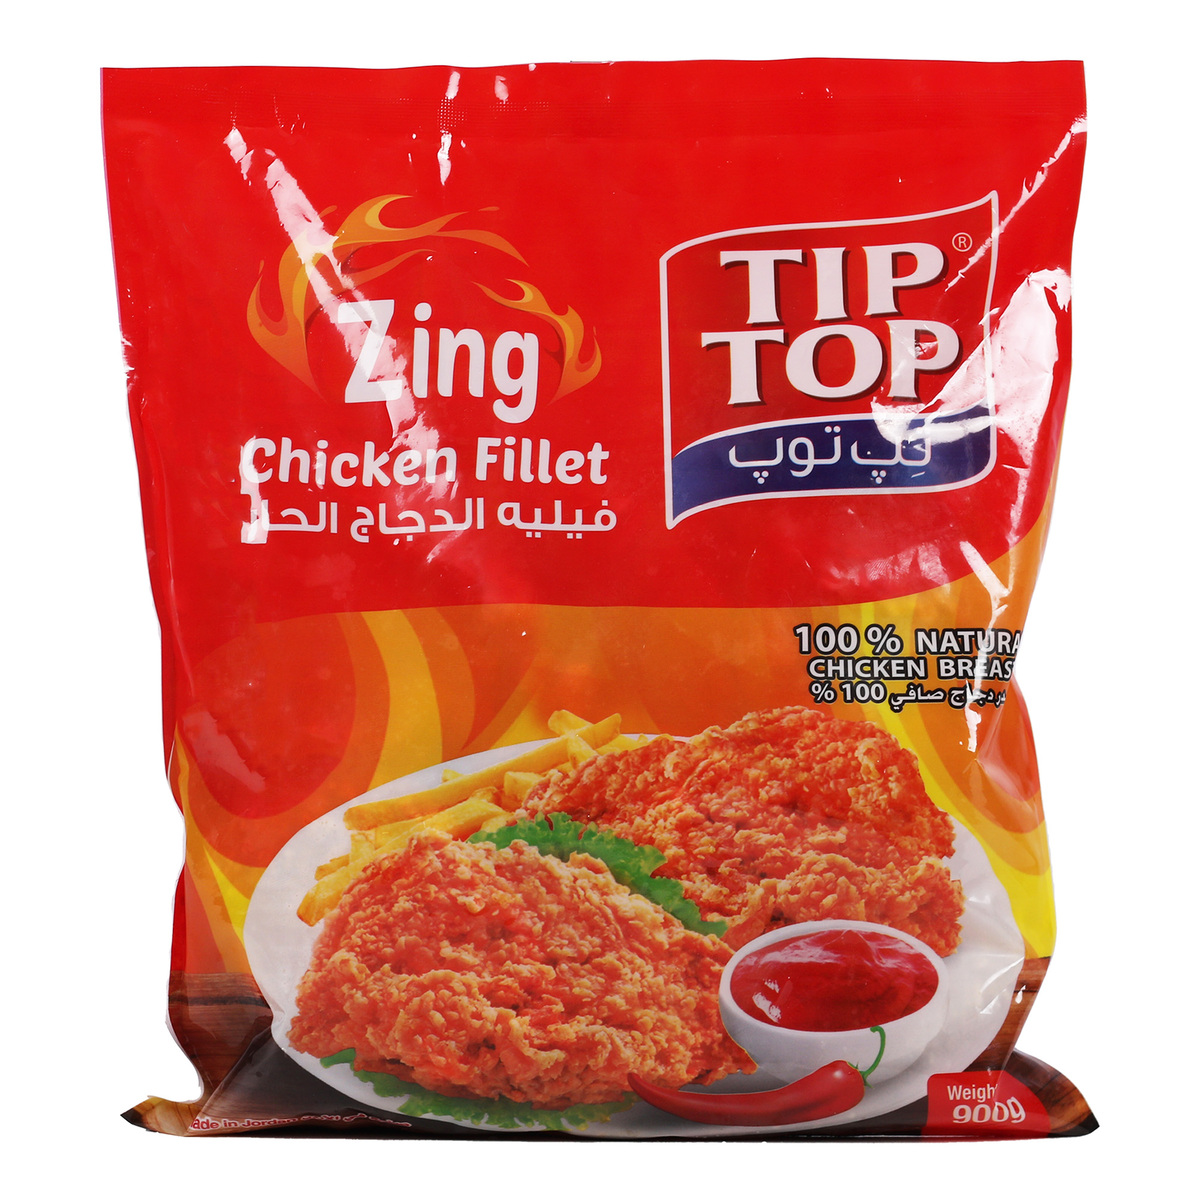 Tip Top Zing Chicken Fillet 900g